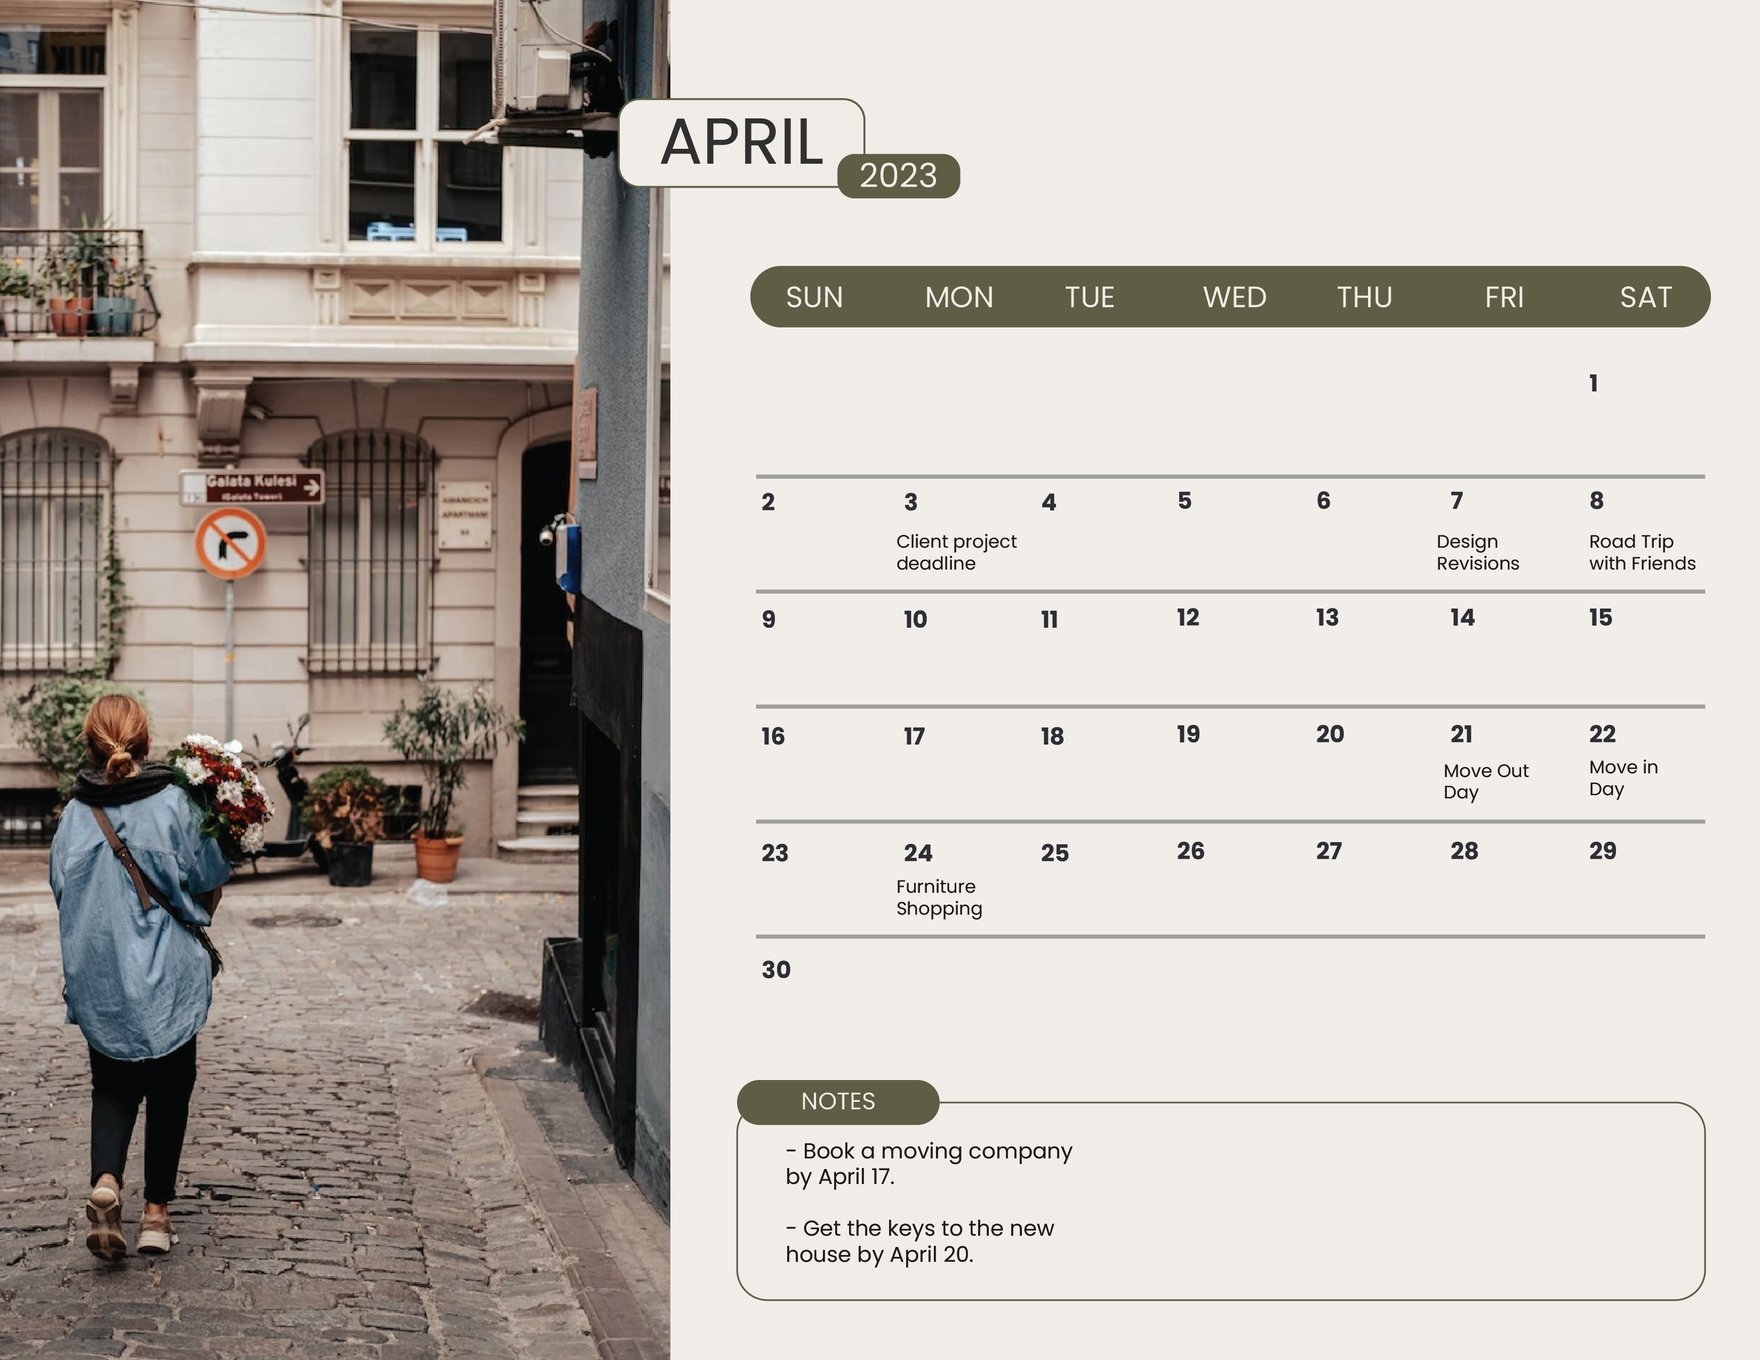 April 2023 Photo Calendar Template in Word, Illustrator, PSD